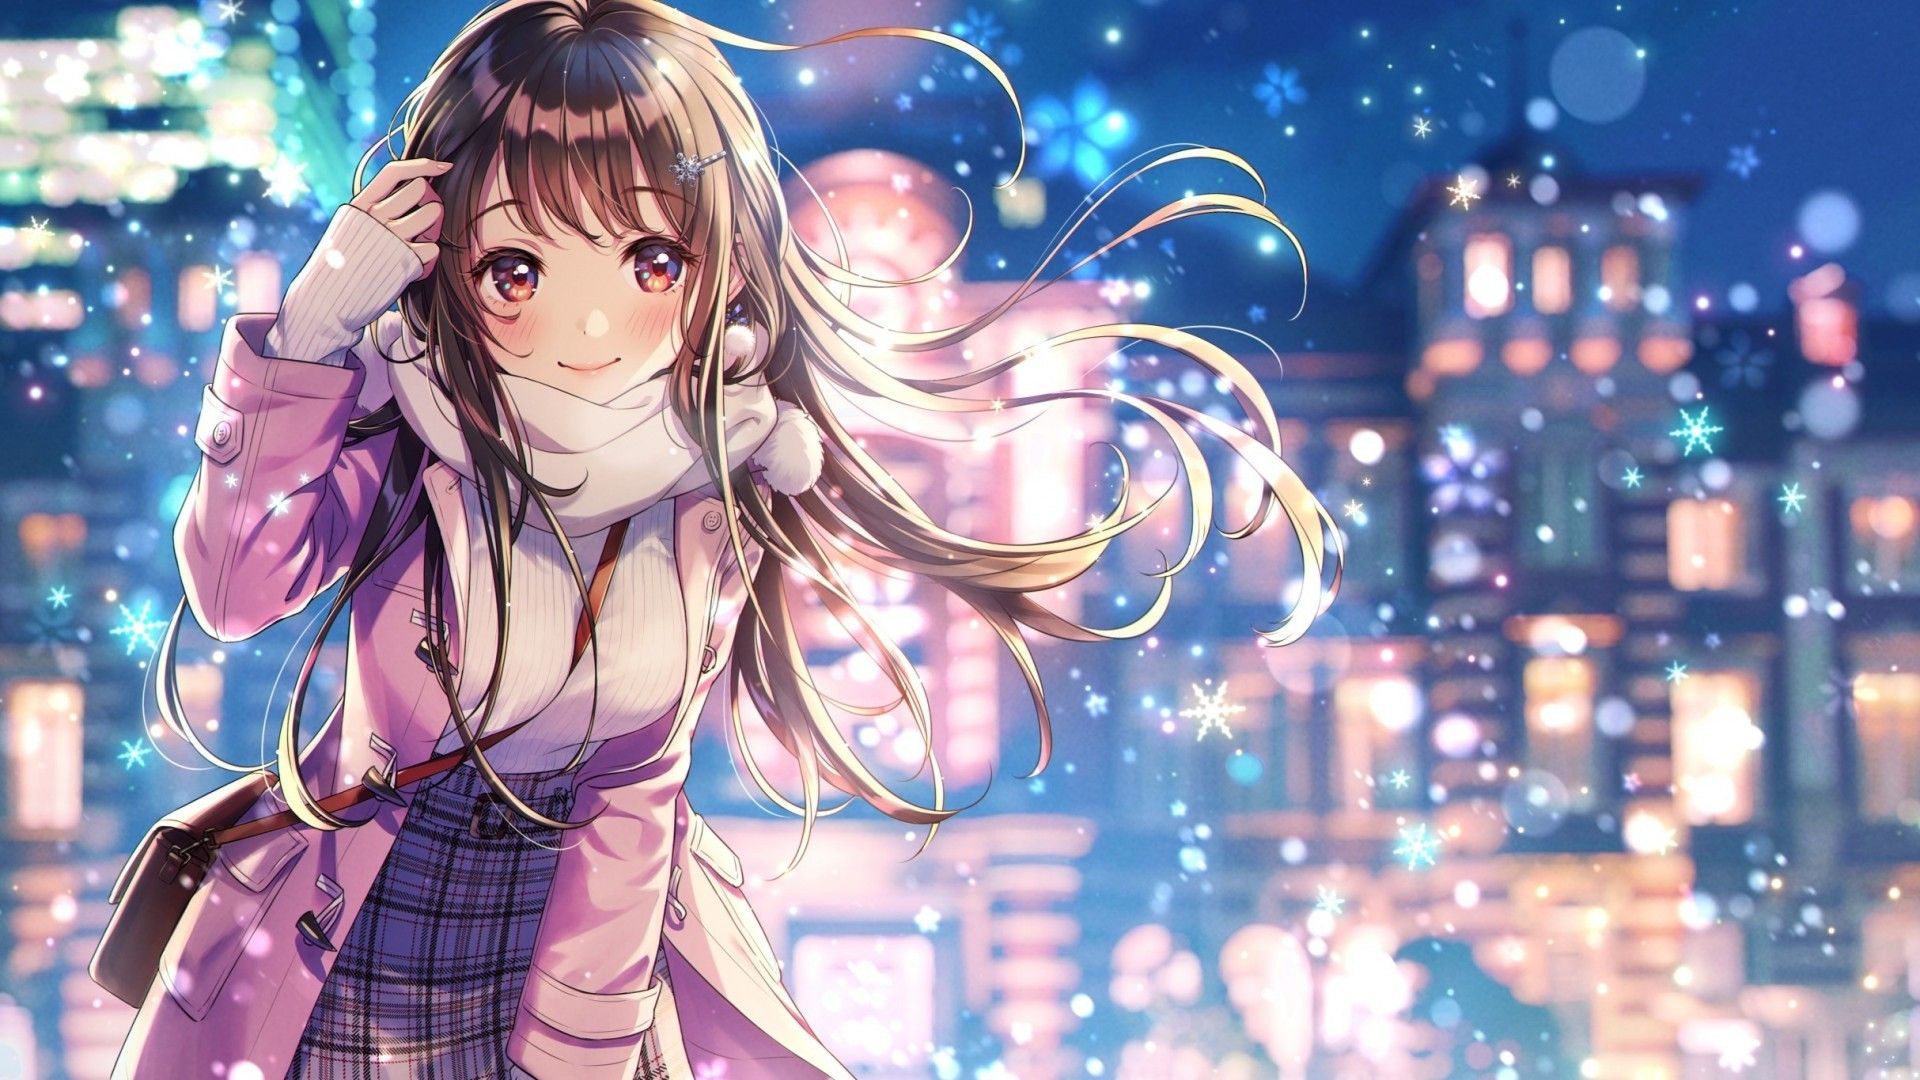 Download 1920x1080 Beautiful Anime Girl, Coat, Smiling, Winter, Snowflakes, Buildings Wallpaper for Widescreen